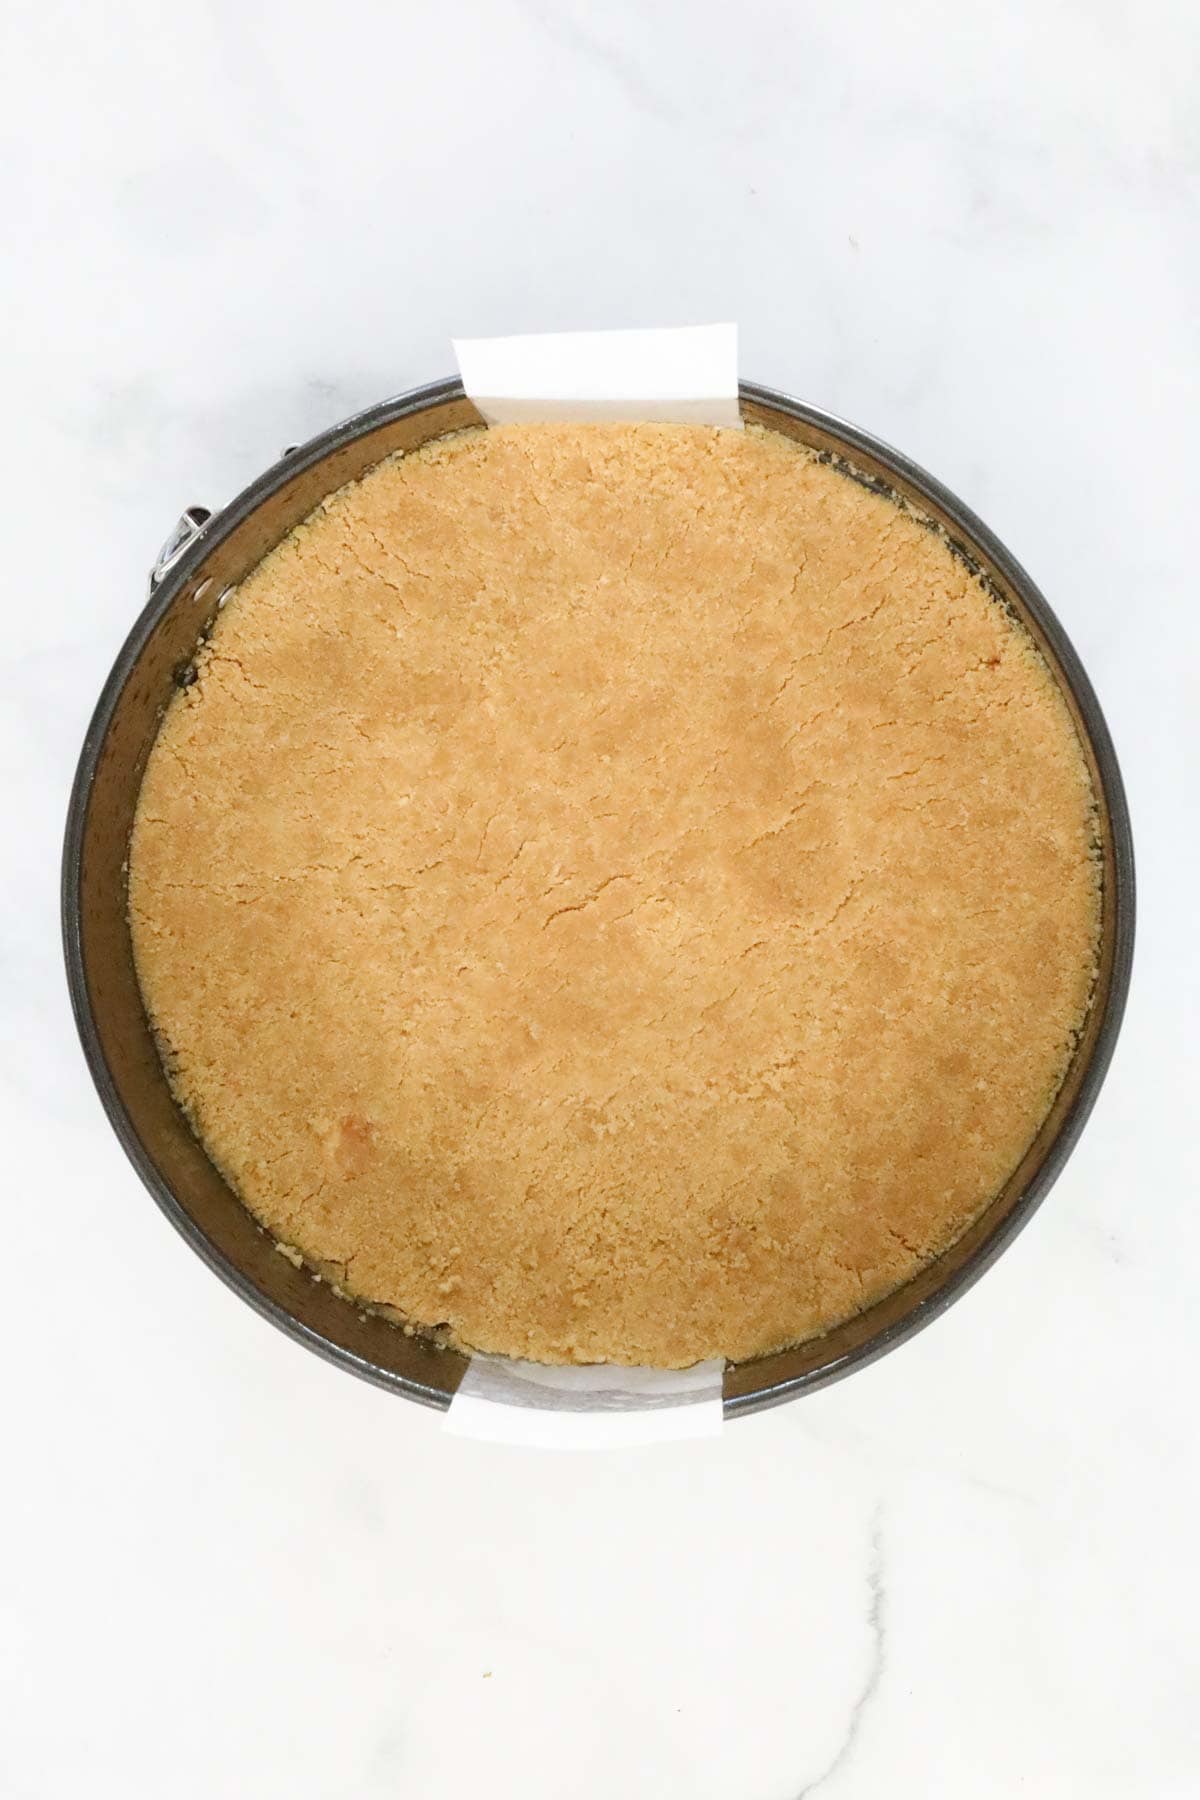 The cheesecake base pressed into a springform tin.